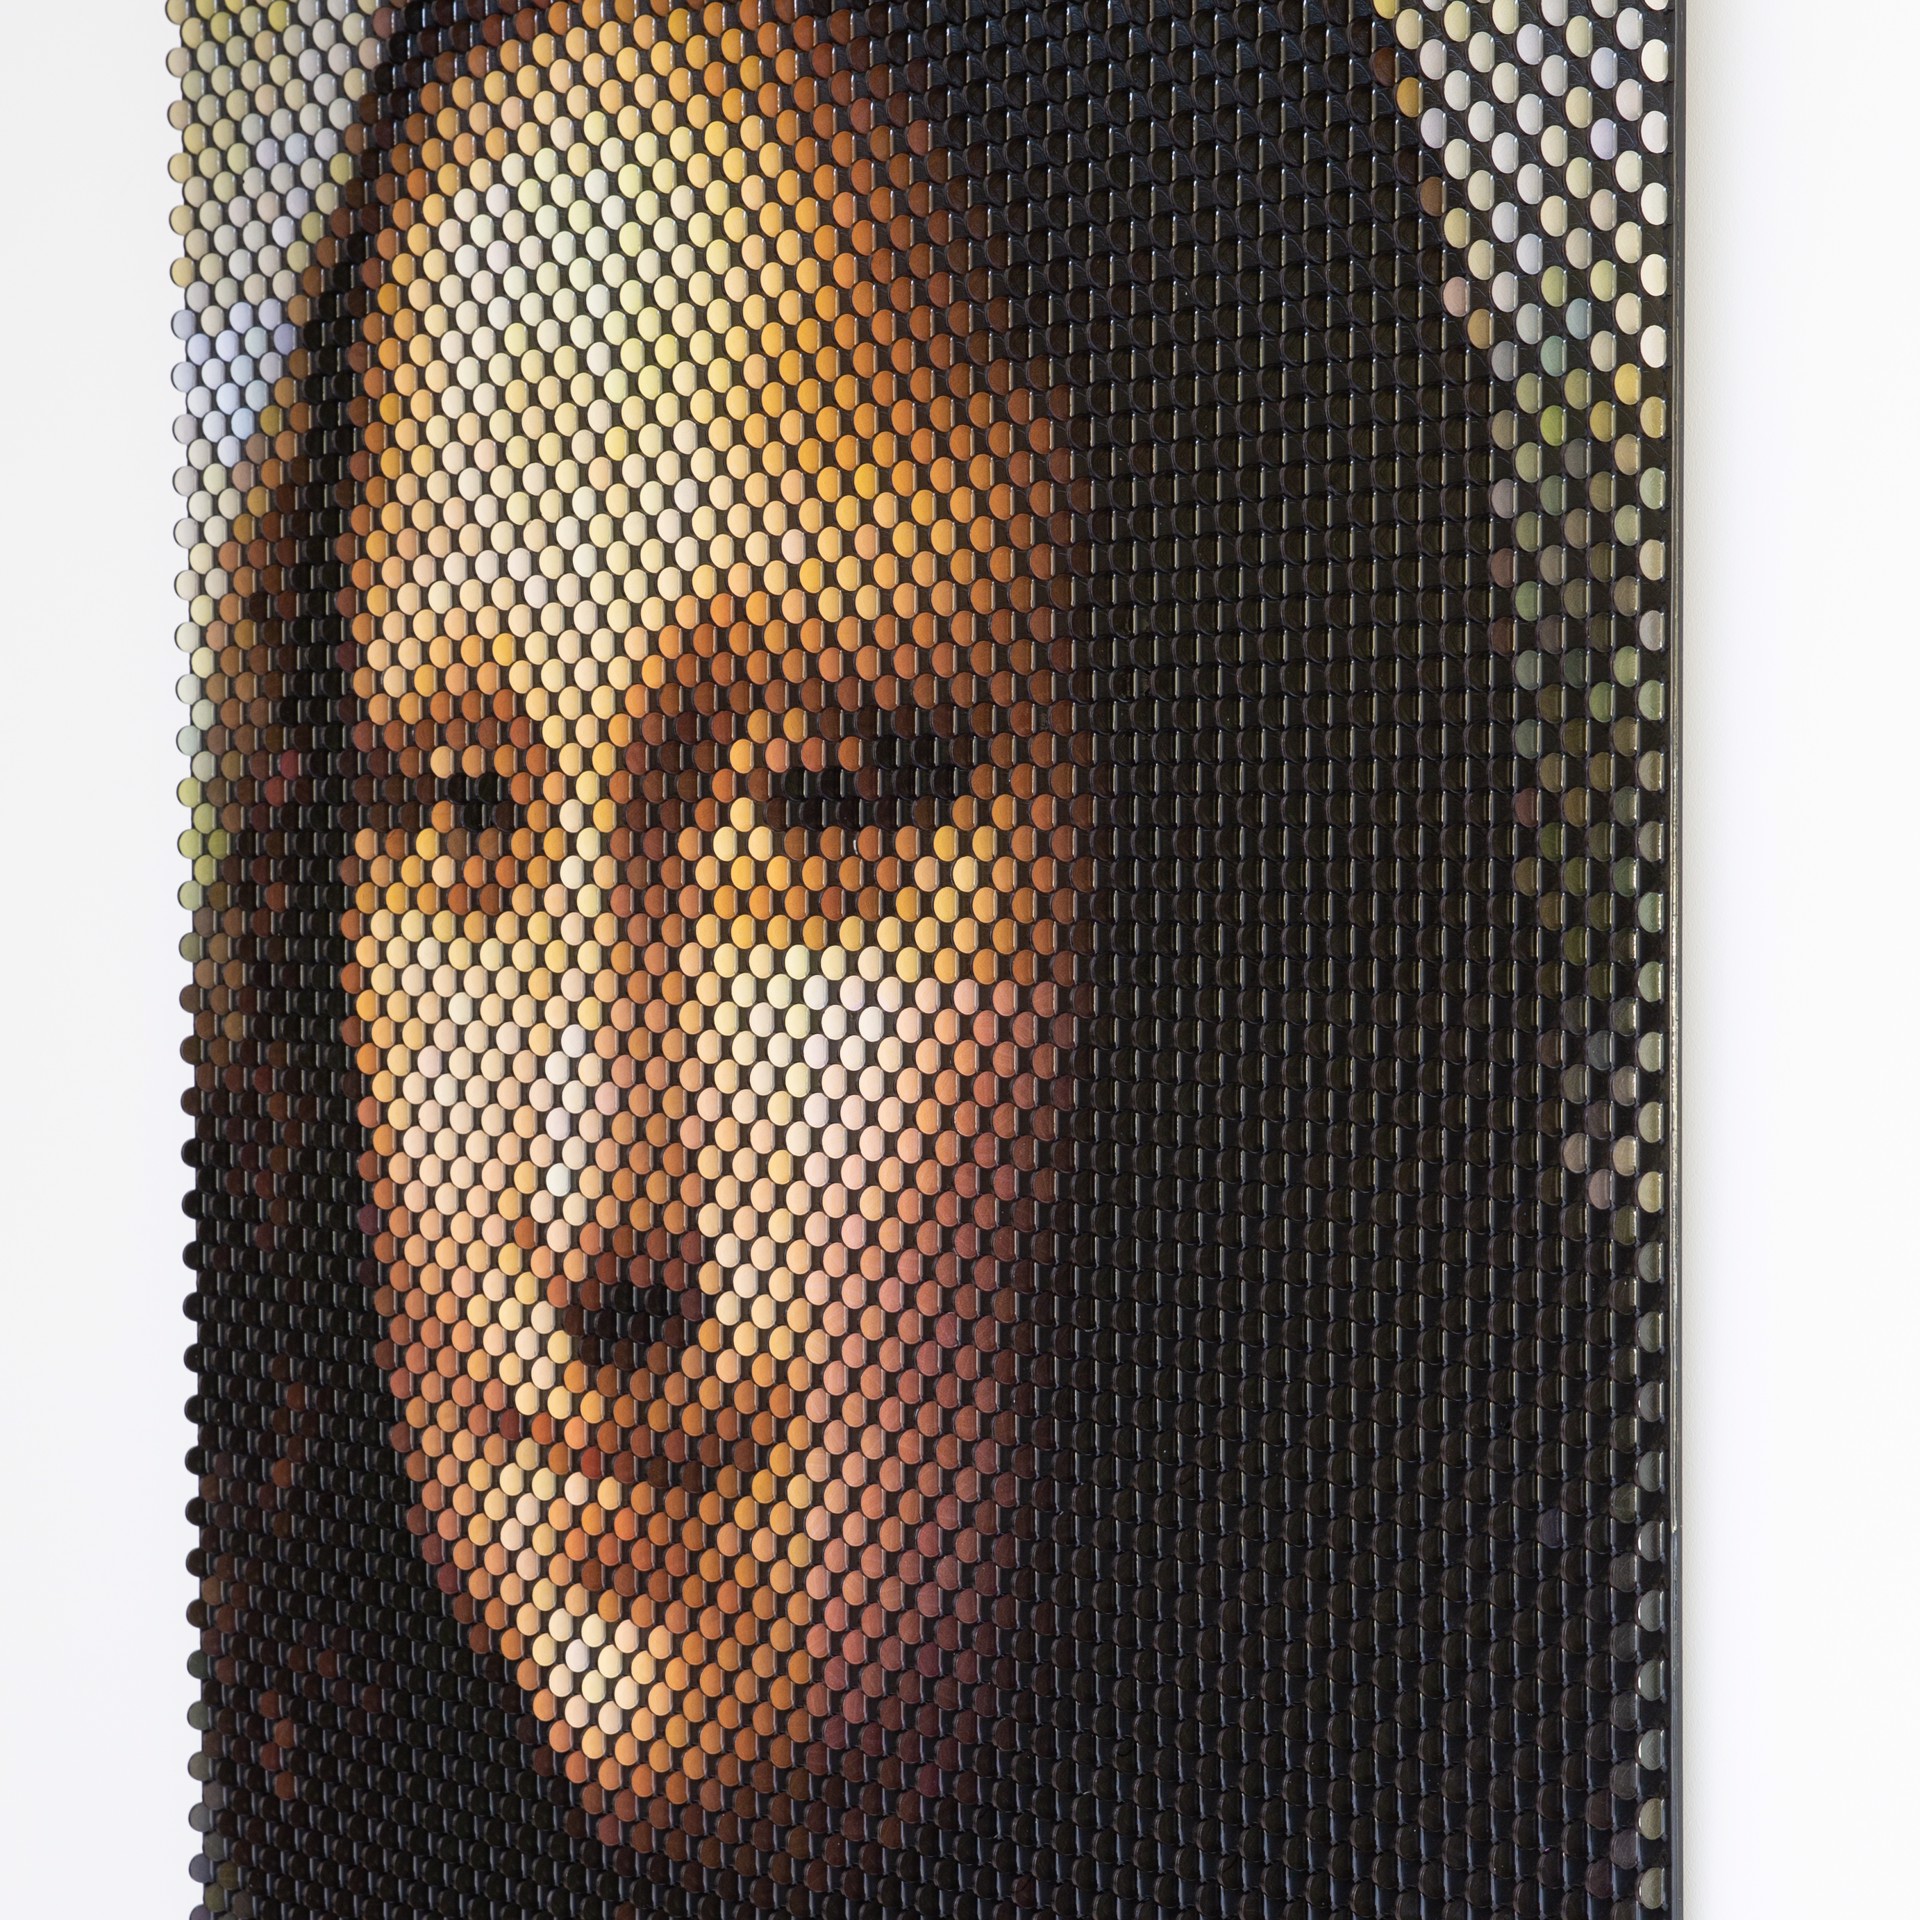 Mona Lisa / Marylin by Juro Kralik